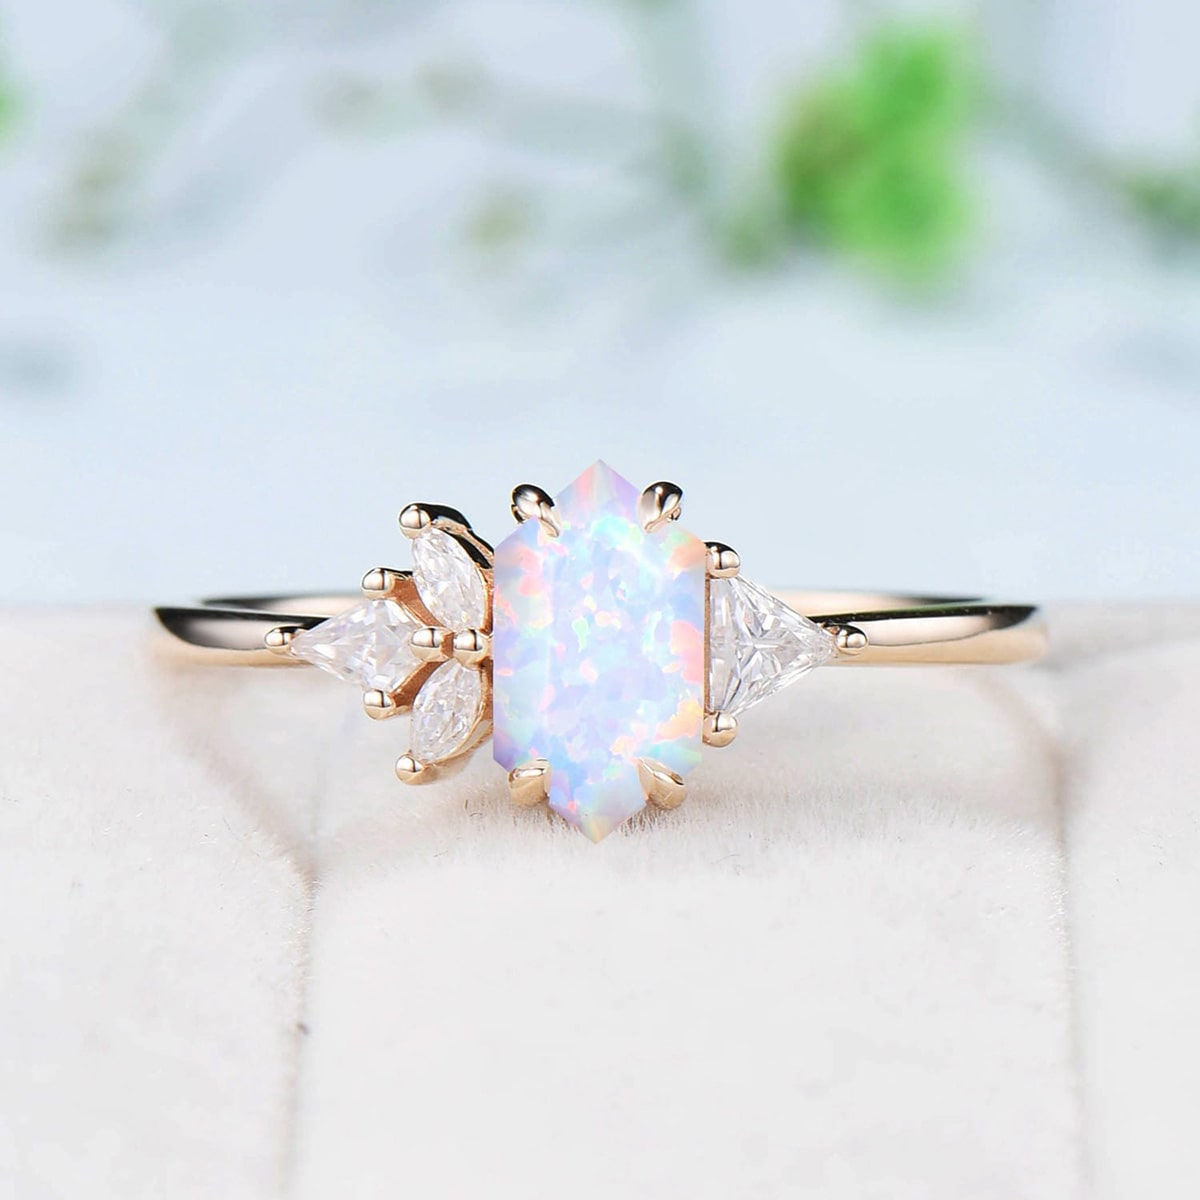 Unique File opal engagement ring long hexagon asymmetrical rose gold white opal wedding ring five moissanite handmade proposal gifts women - PENFINE